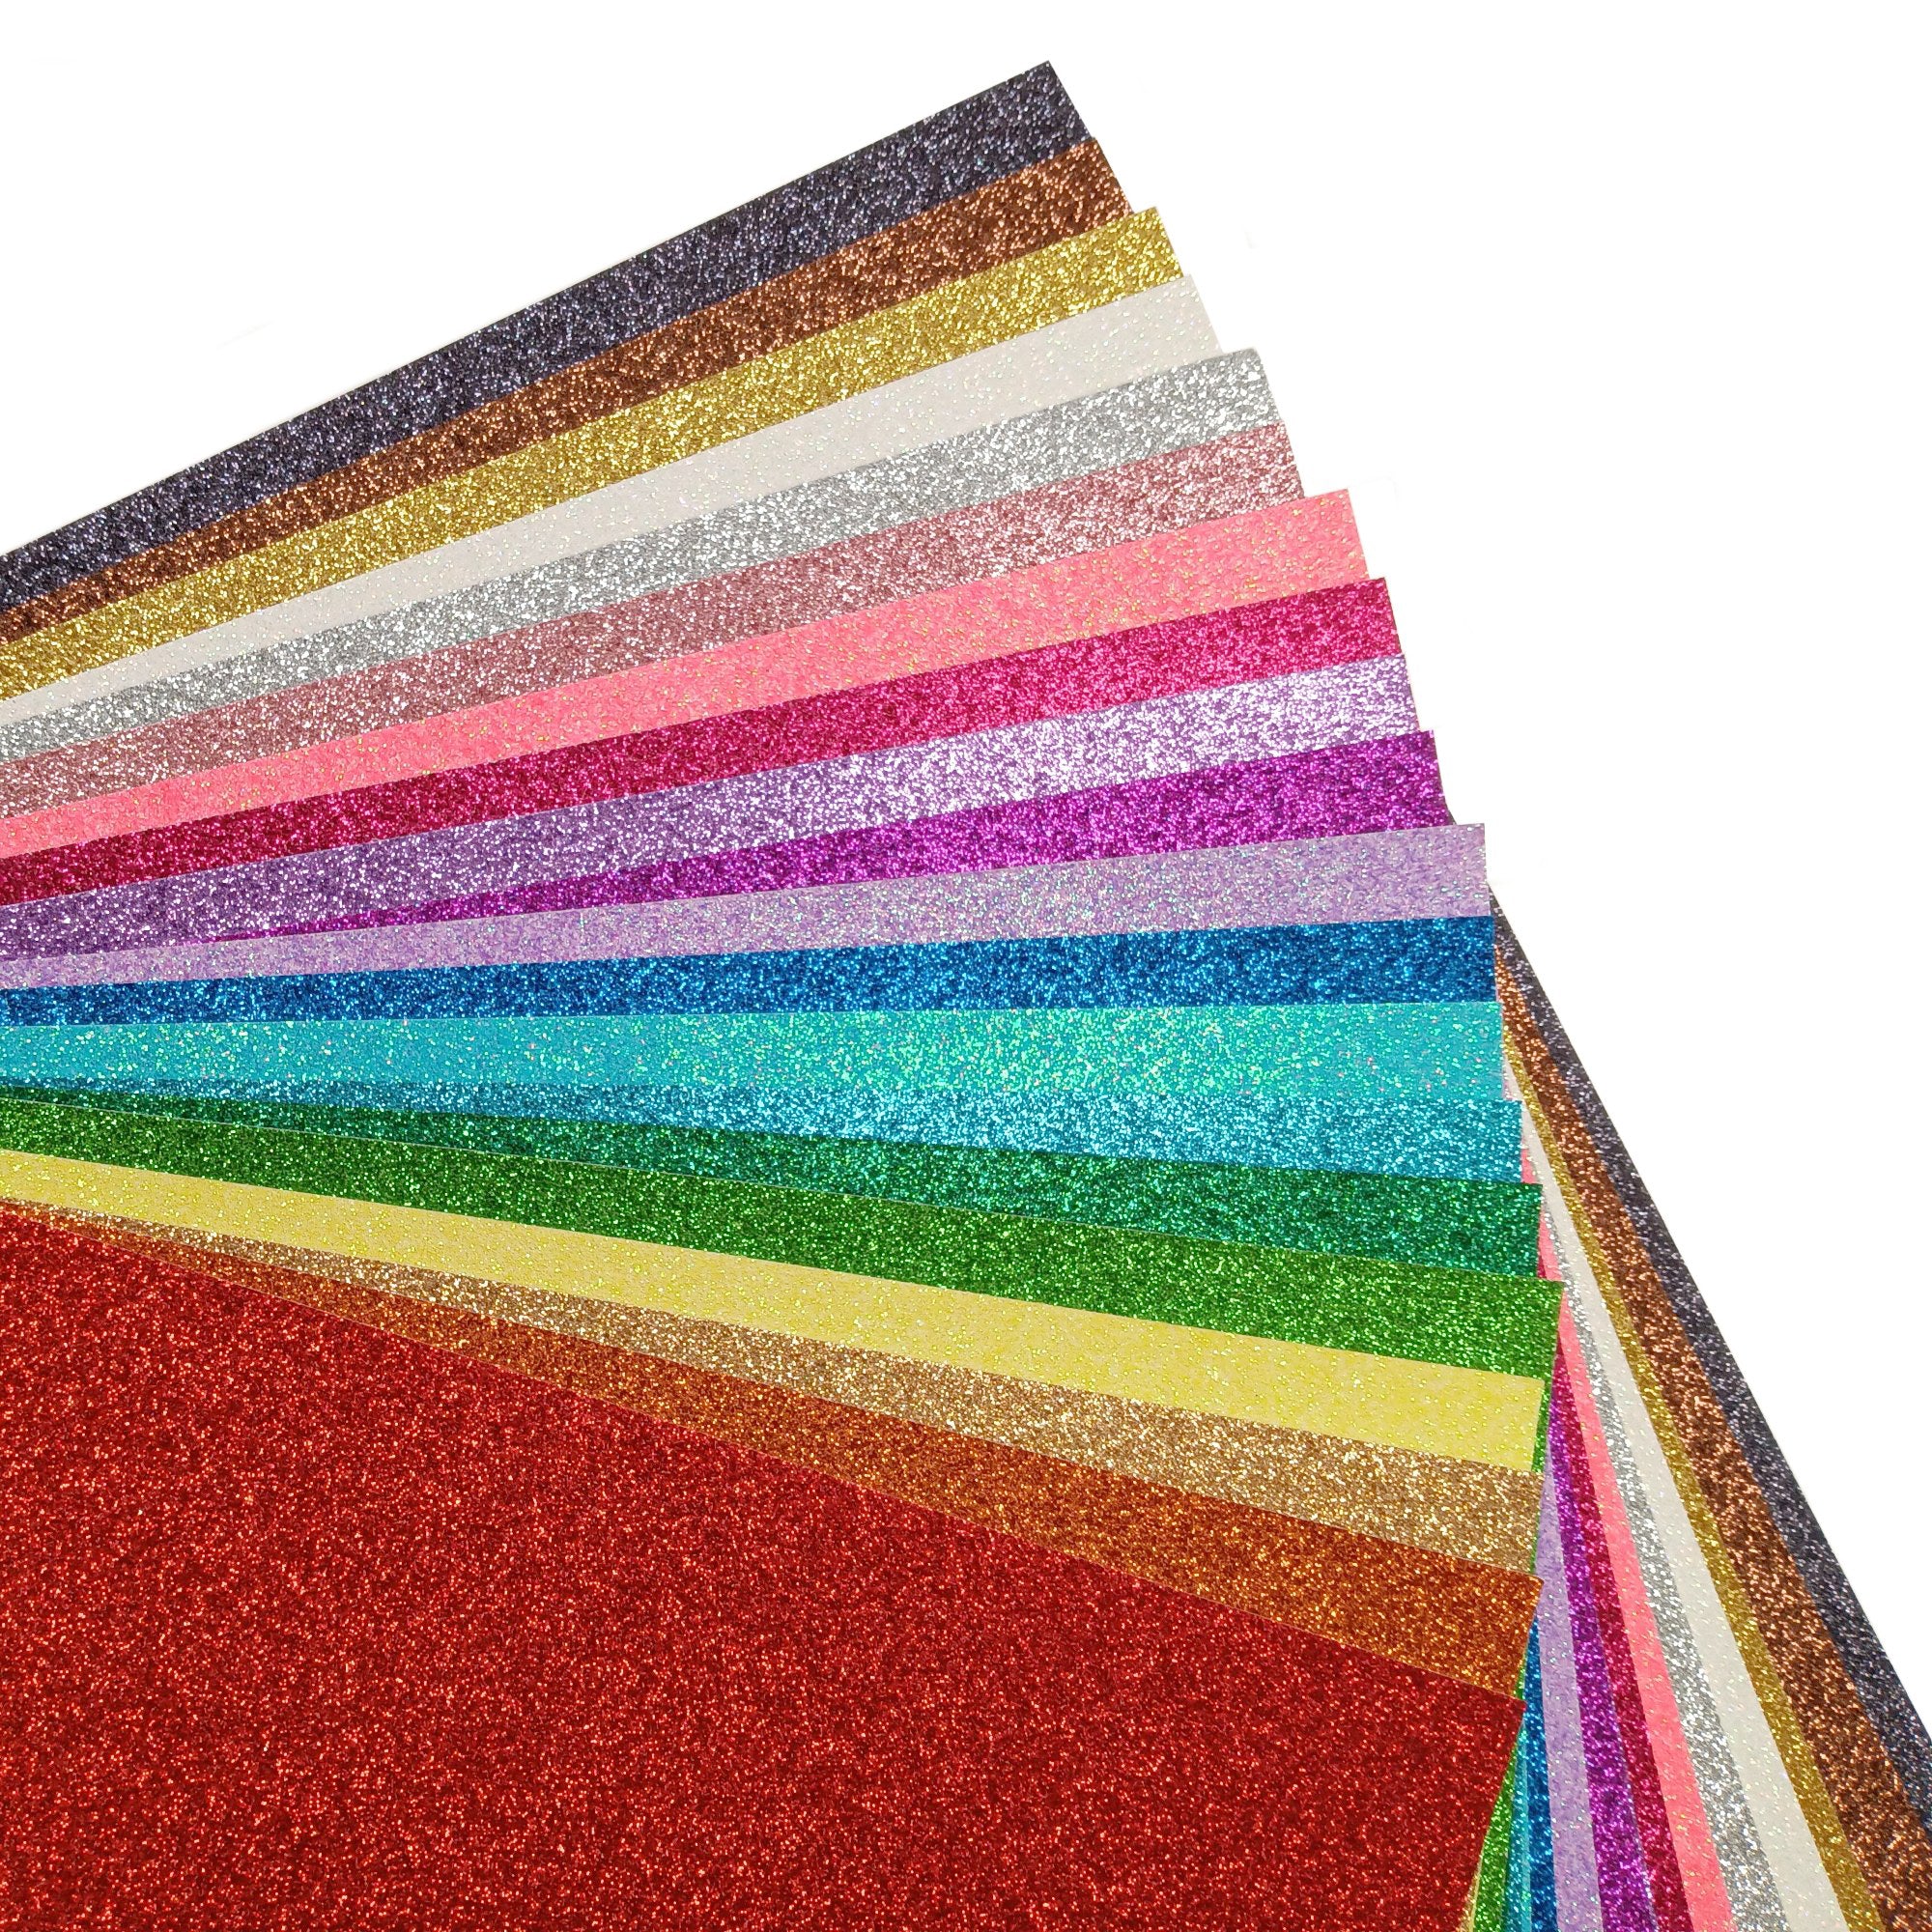 Glitter Cardstock Paper for Crafts 40 Sheets A4 – HTVRONT